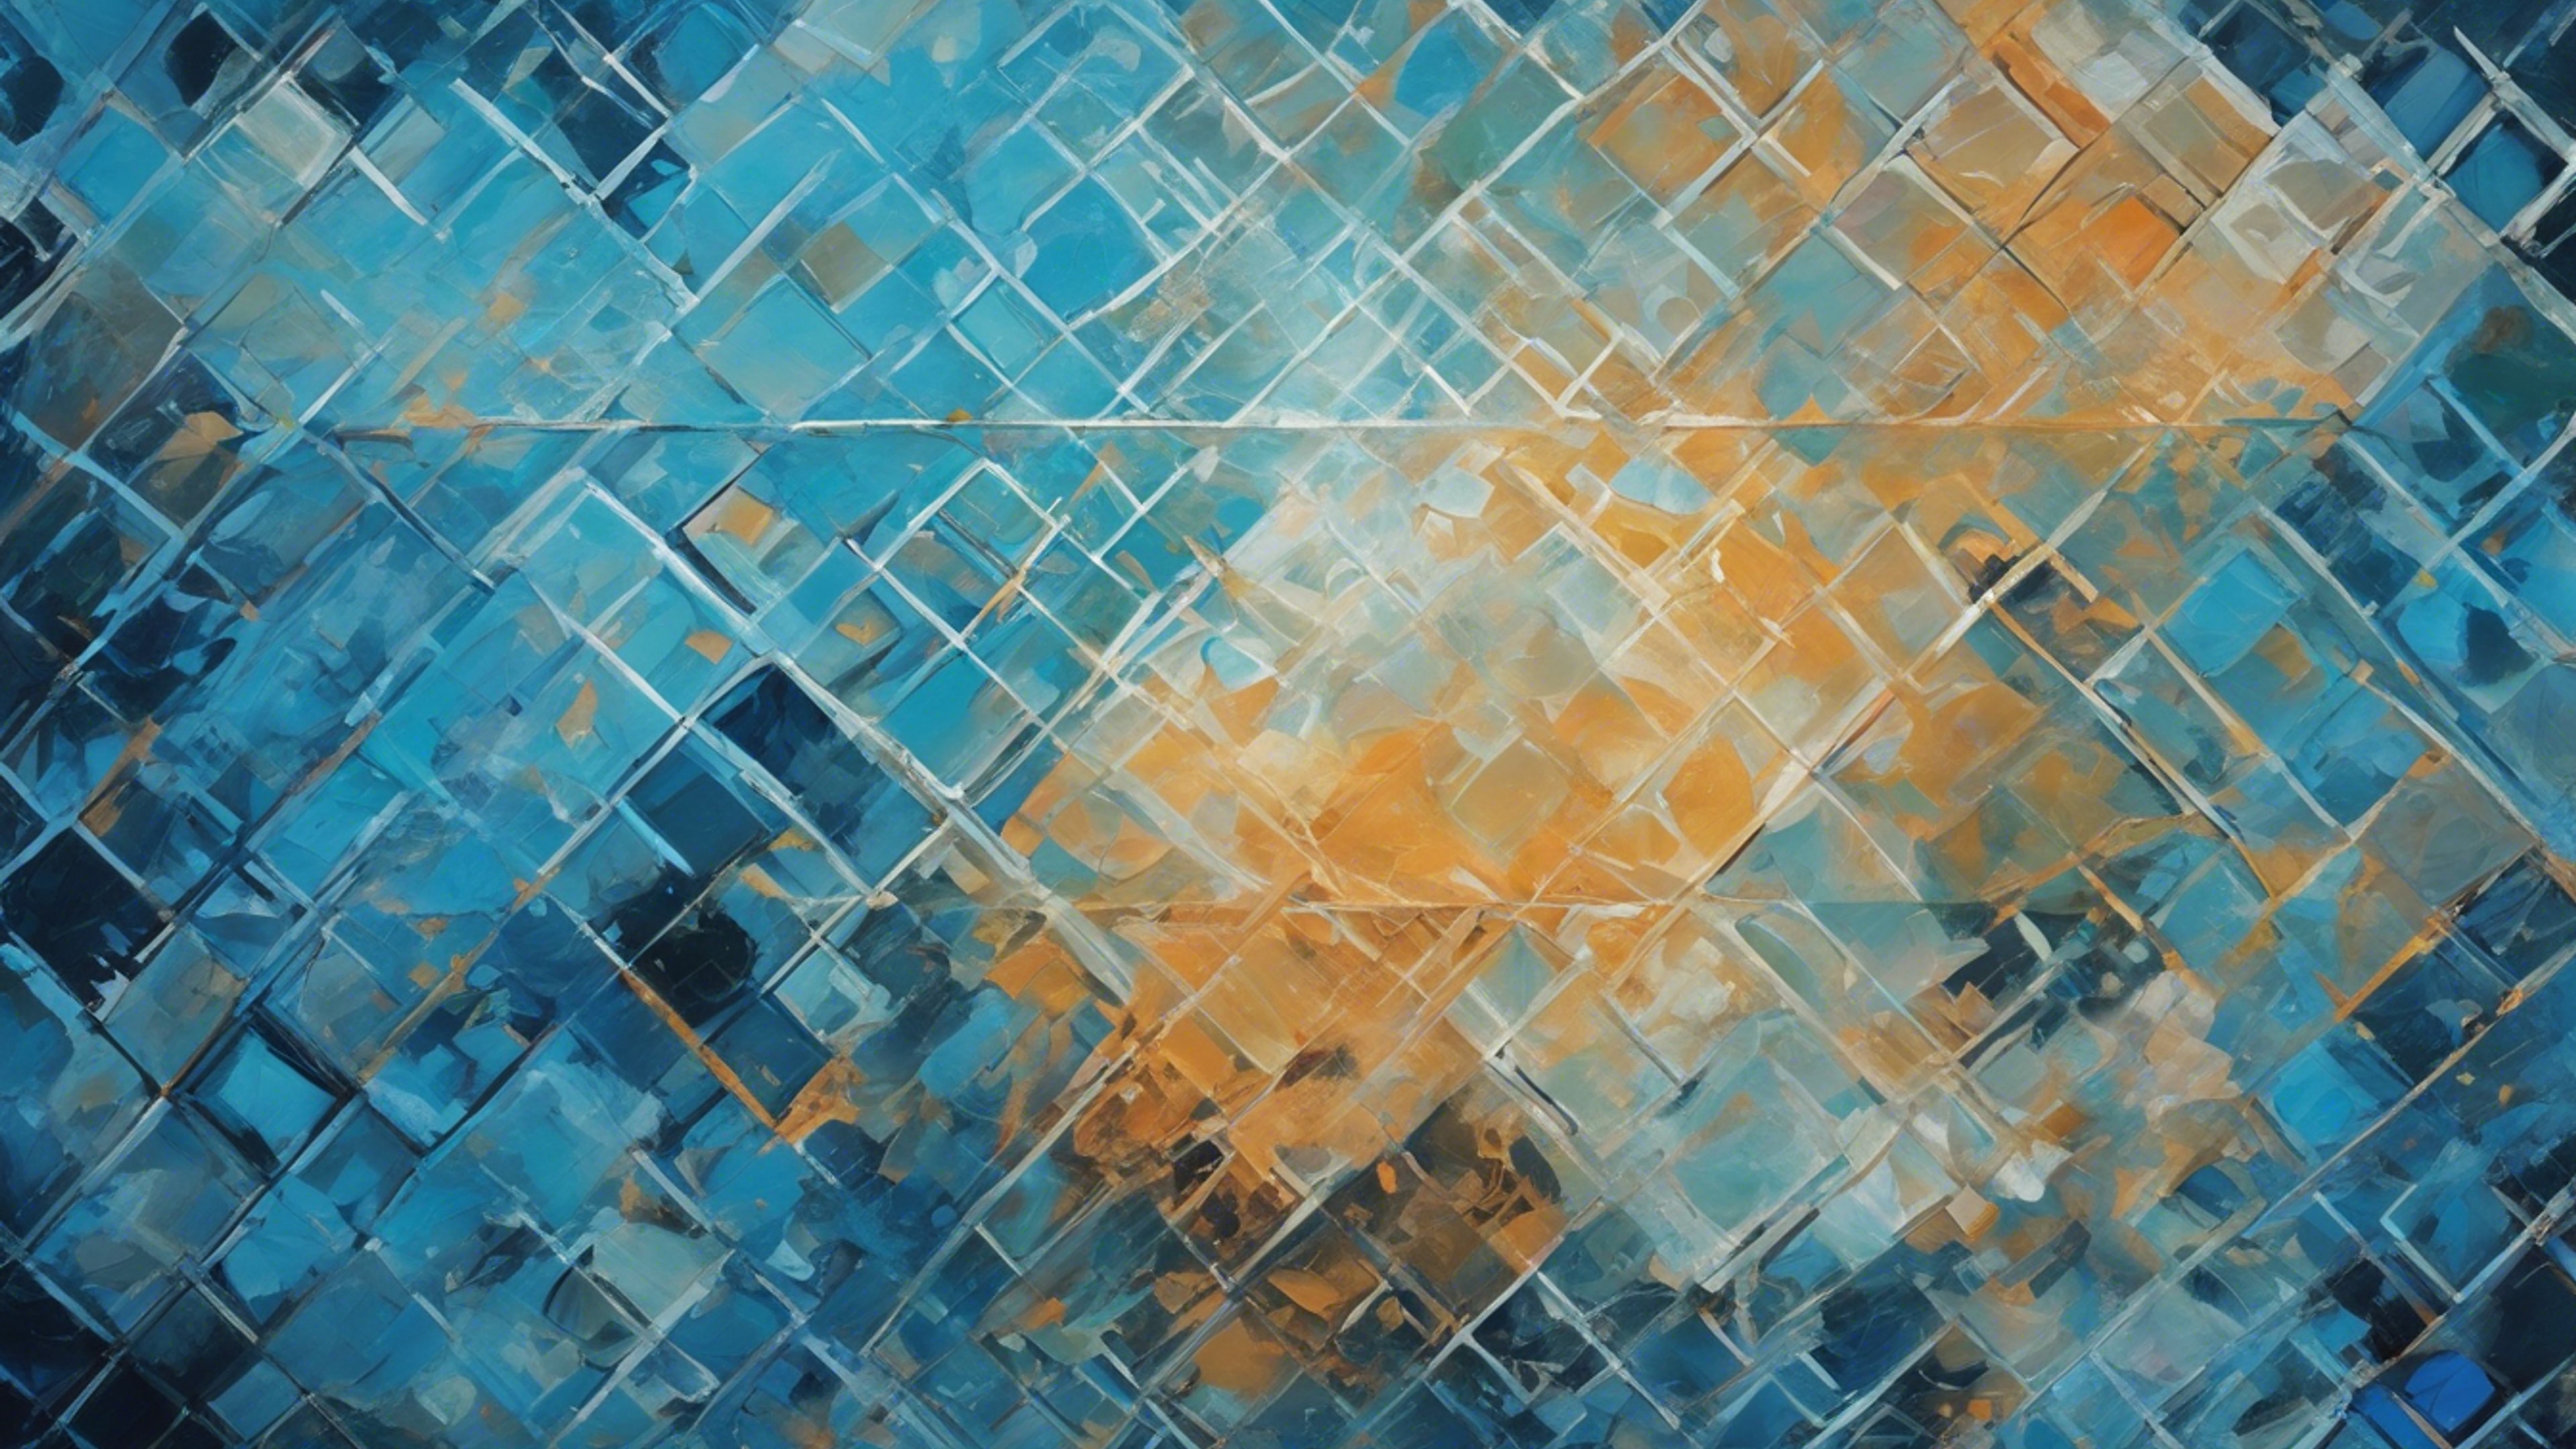 A cool blue geometric abstract painting Sfondo[ac7eea7ca87f45839e46]